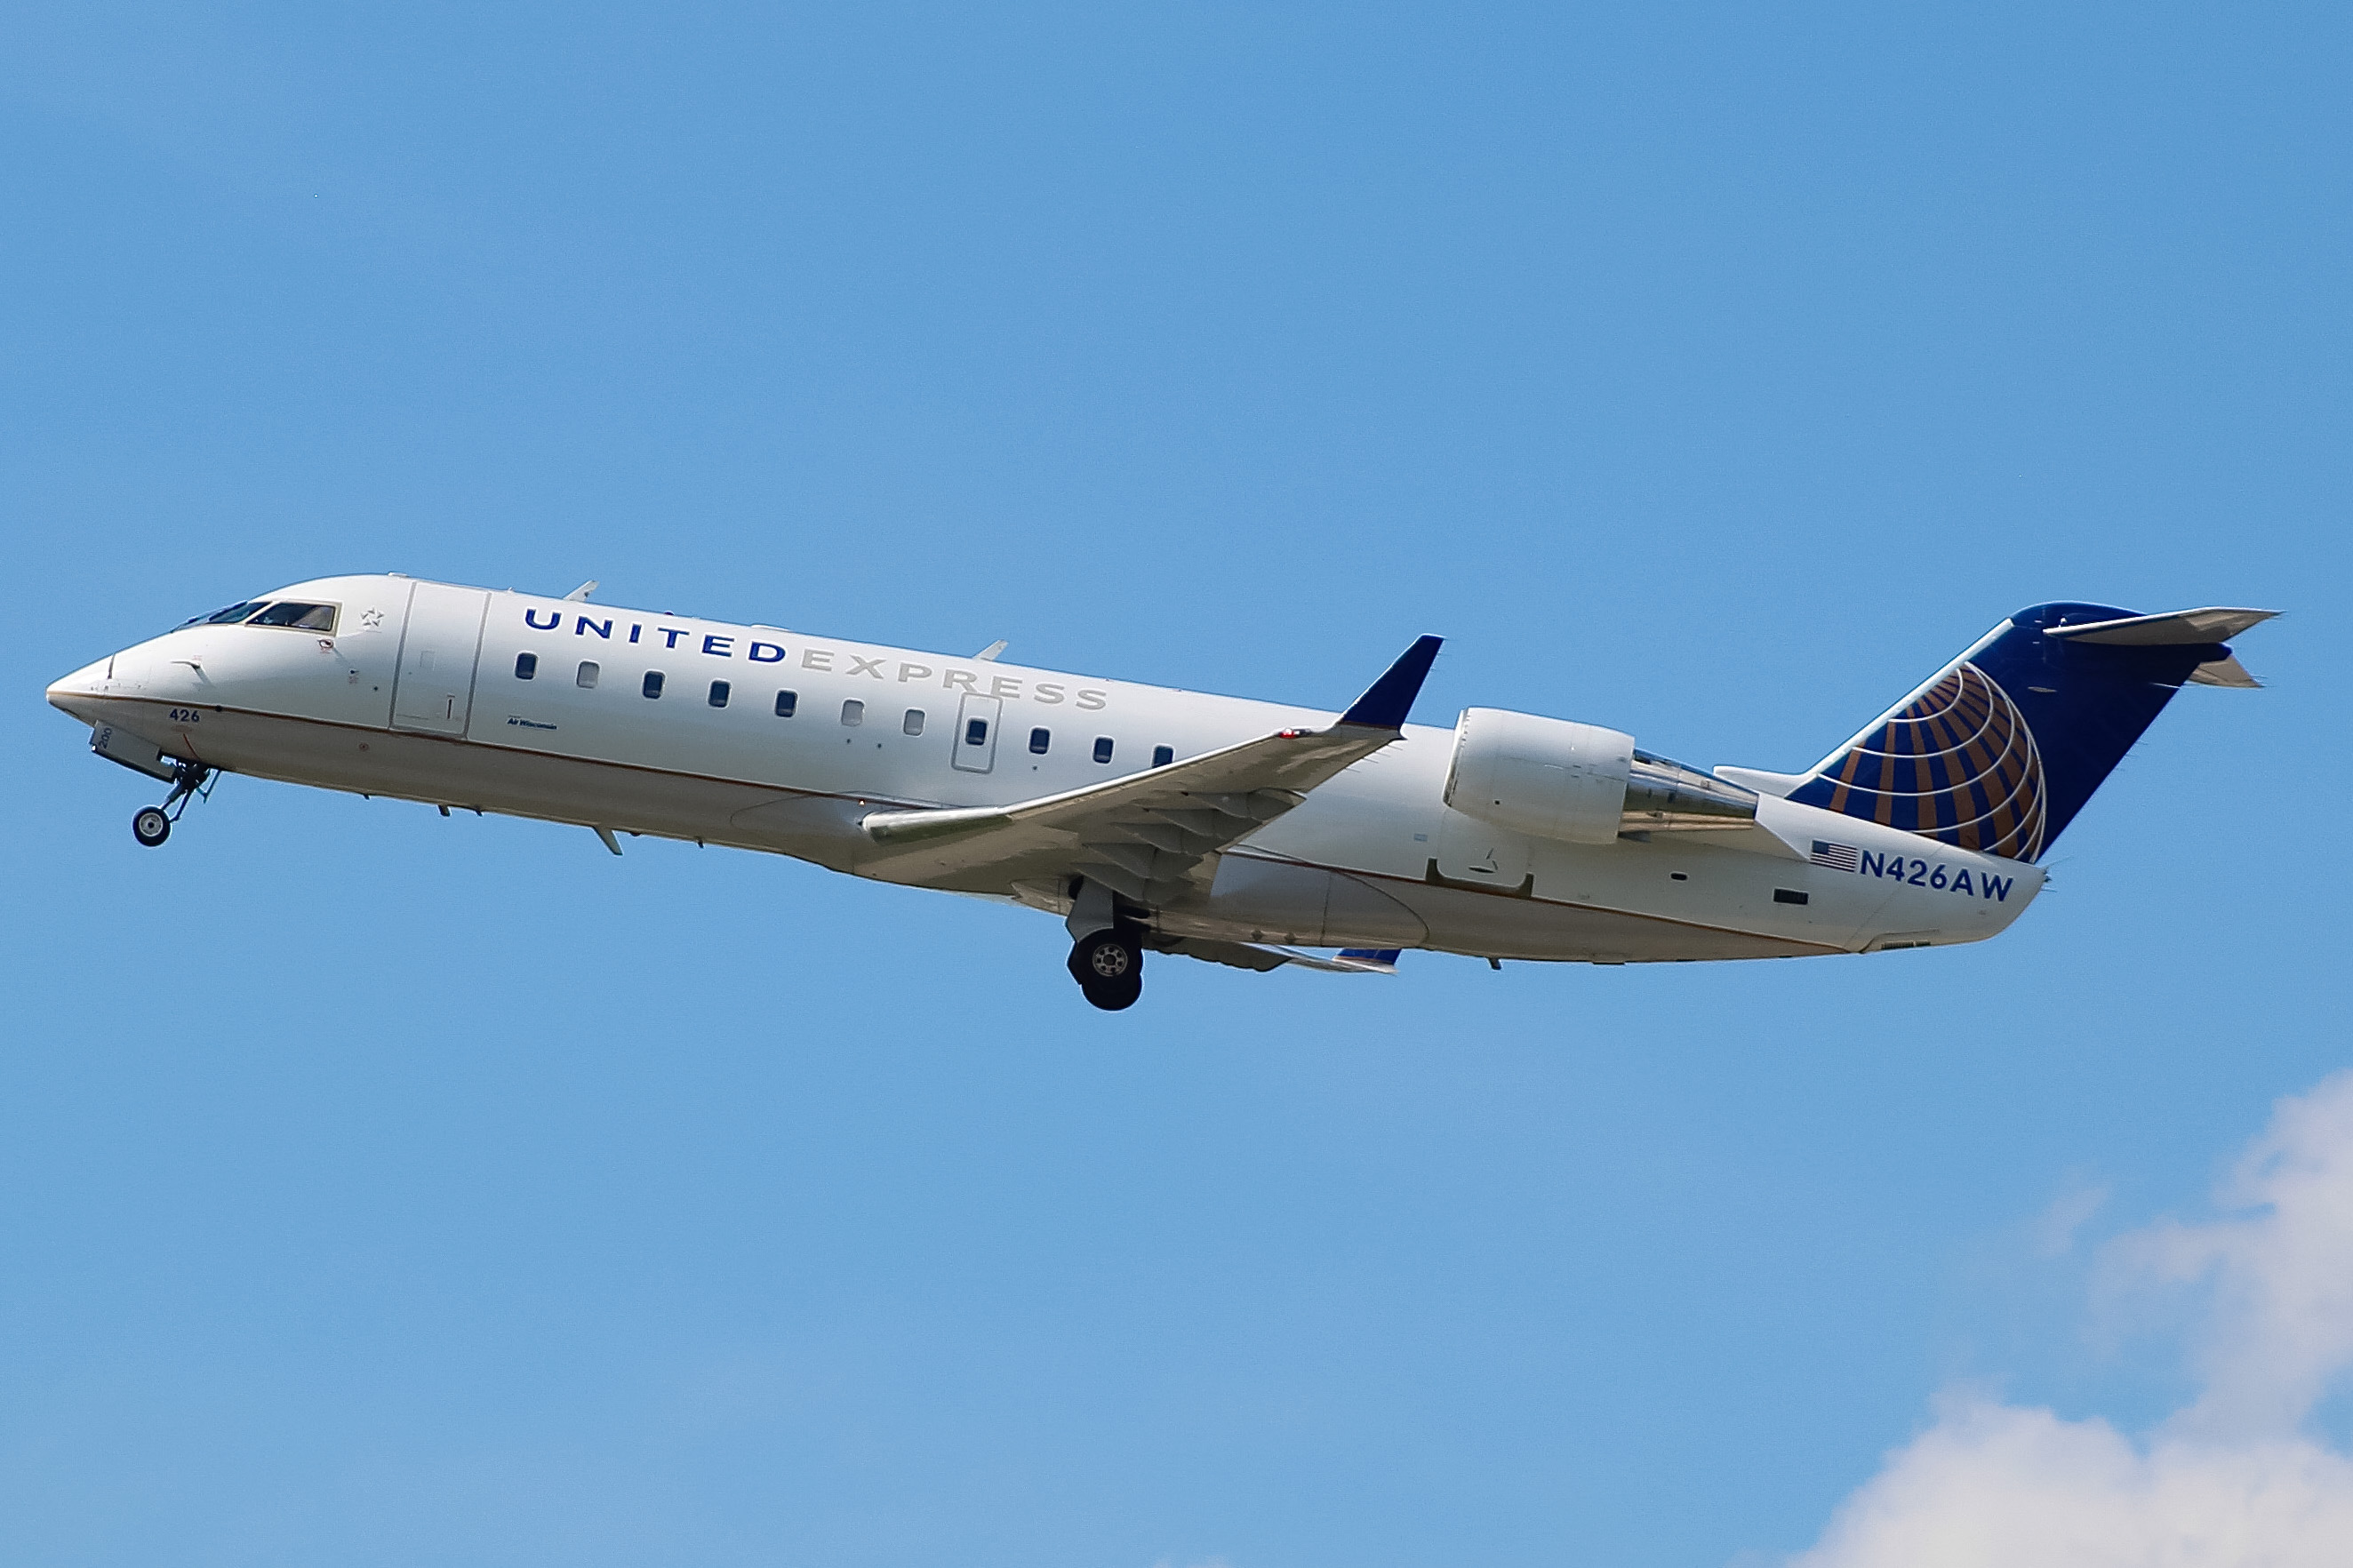 PHOTOS: United Express Jet Overruns Runway in Dayton, Ohio